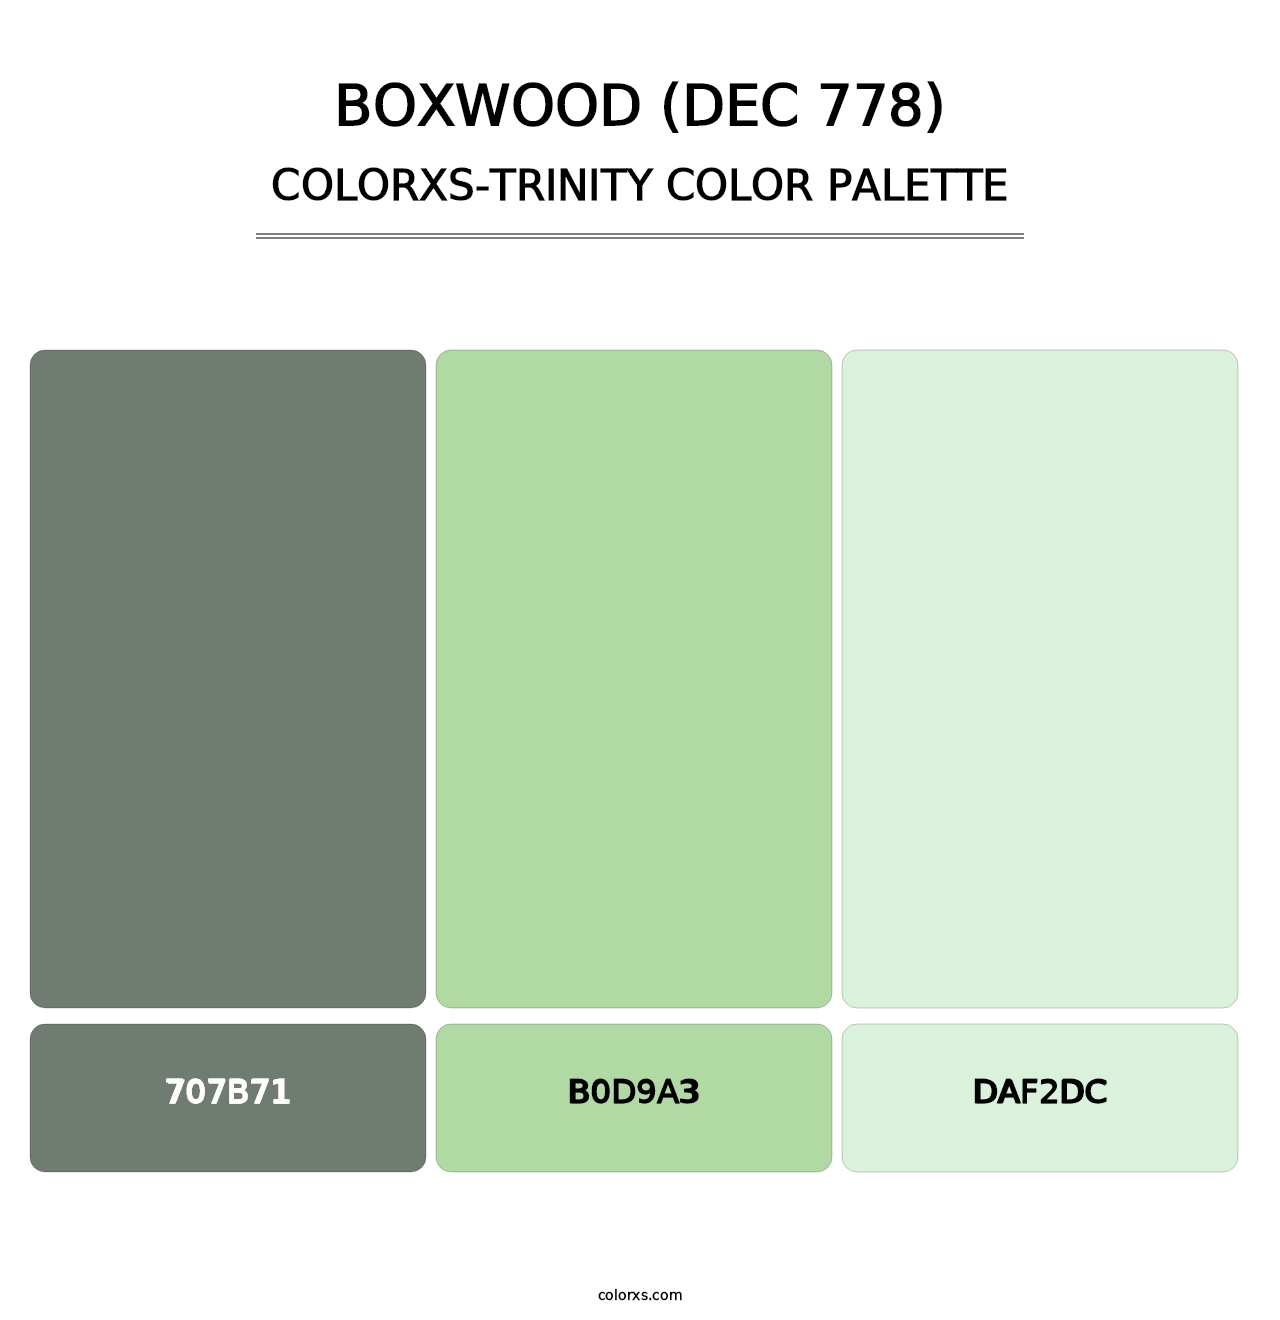 Boxwood (DEC 778) - Colorxs Trinity Palette